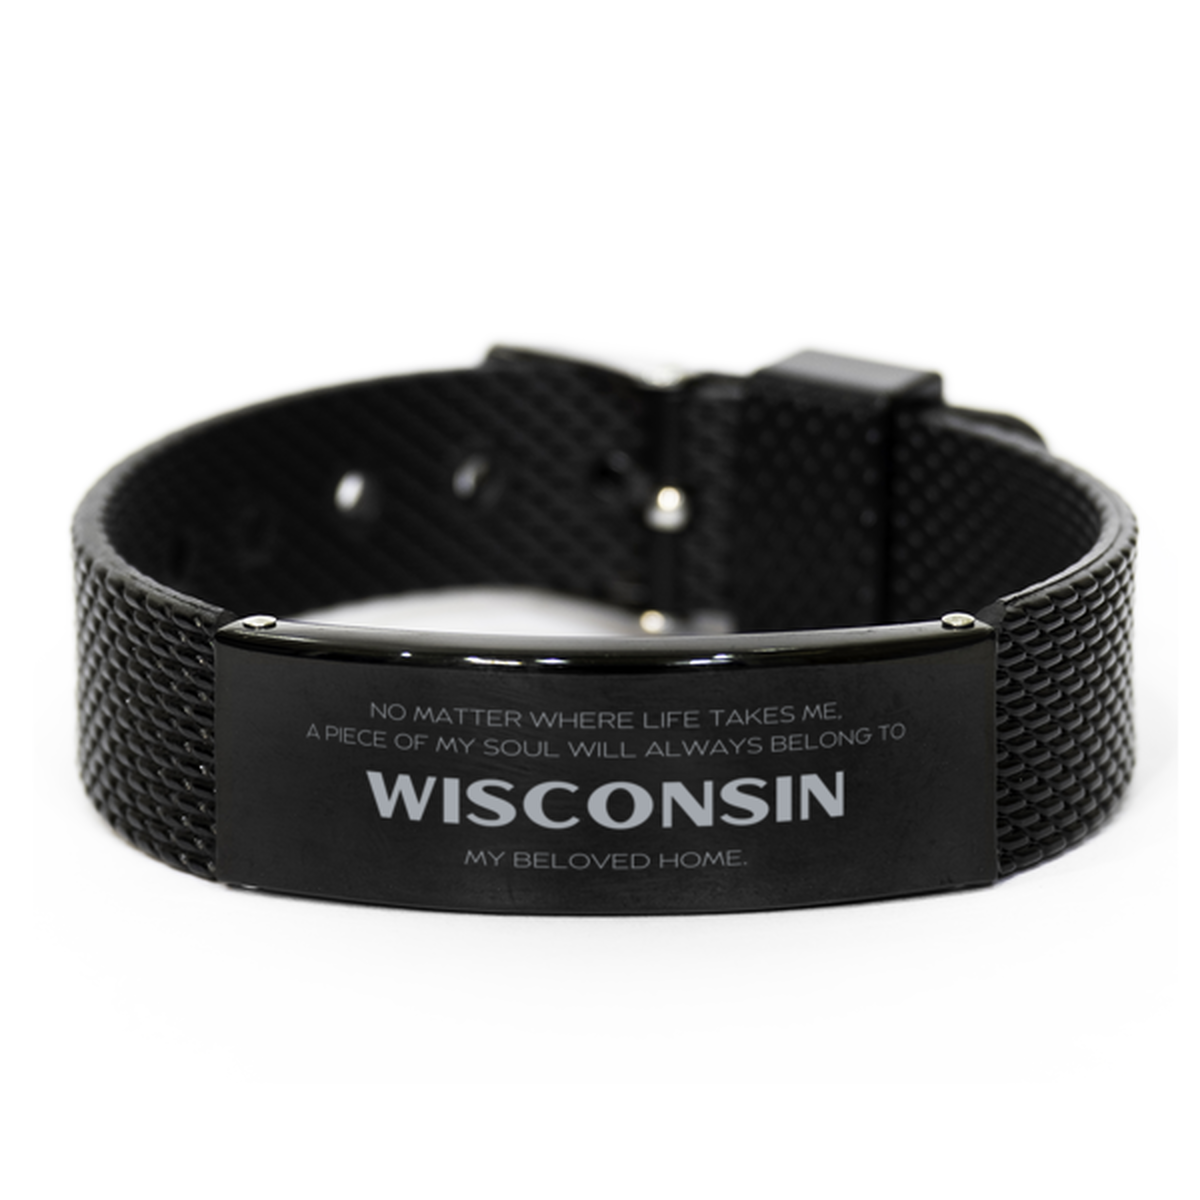 Love Wisconsin State Gifts, My soul will always belong to Wisconsin, Proud Black Shark Mesh Bracelet, Birthday Unique Gifts For Wisconsin Men, Women, Friends